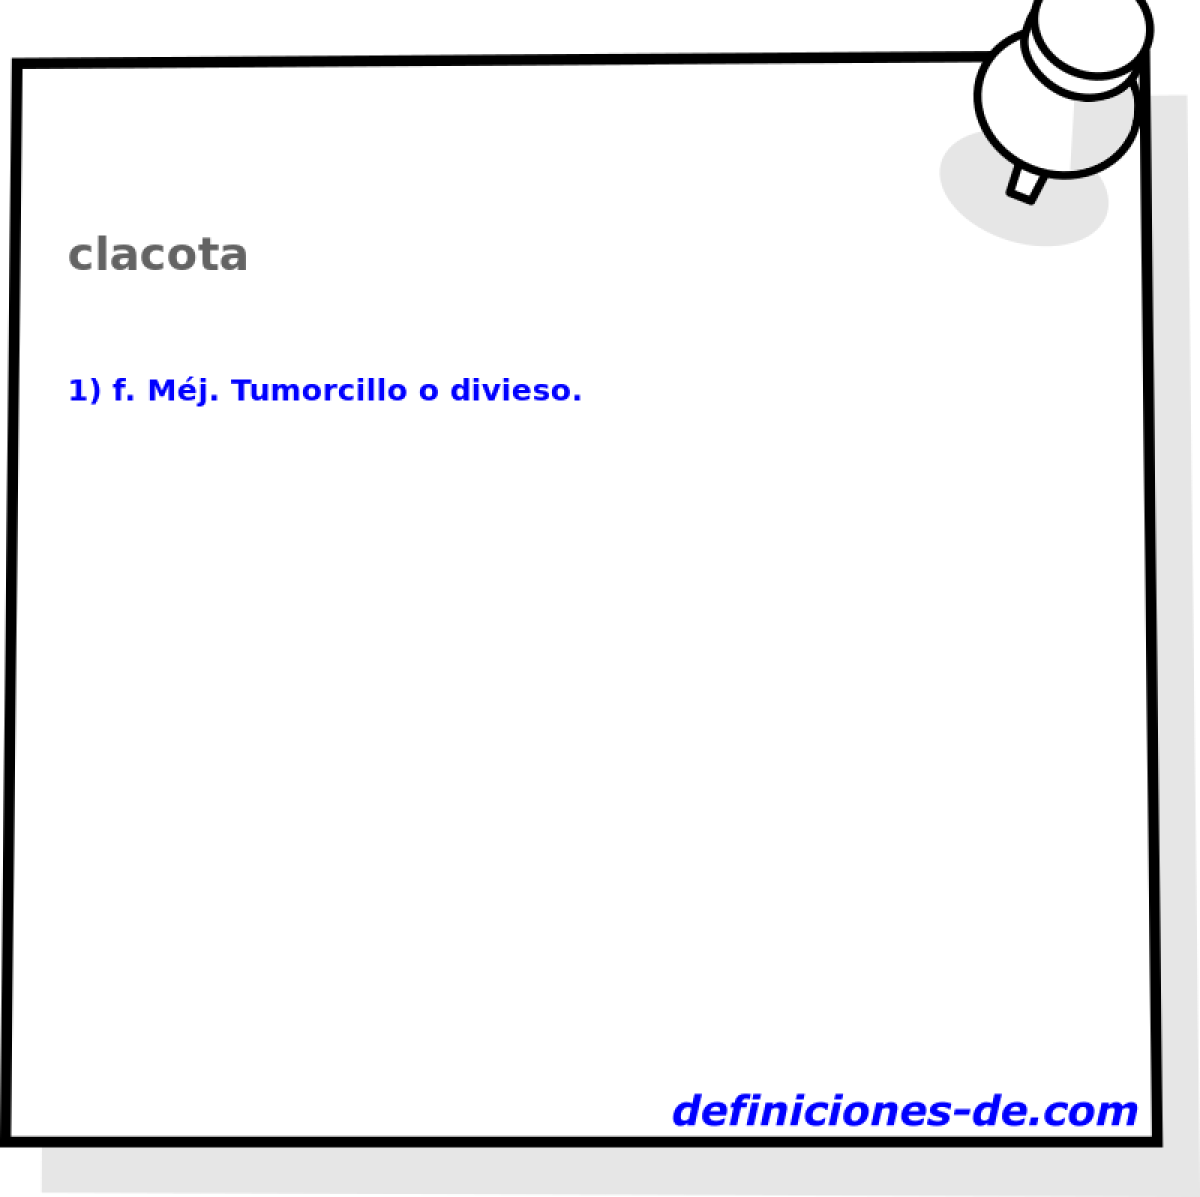 clacota 